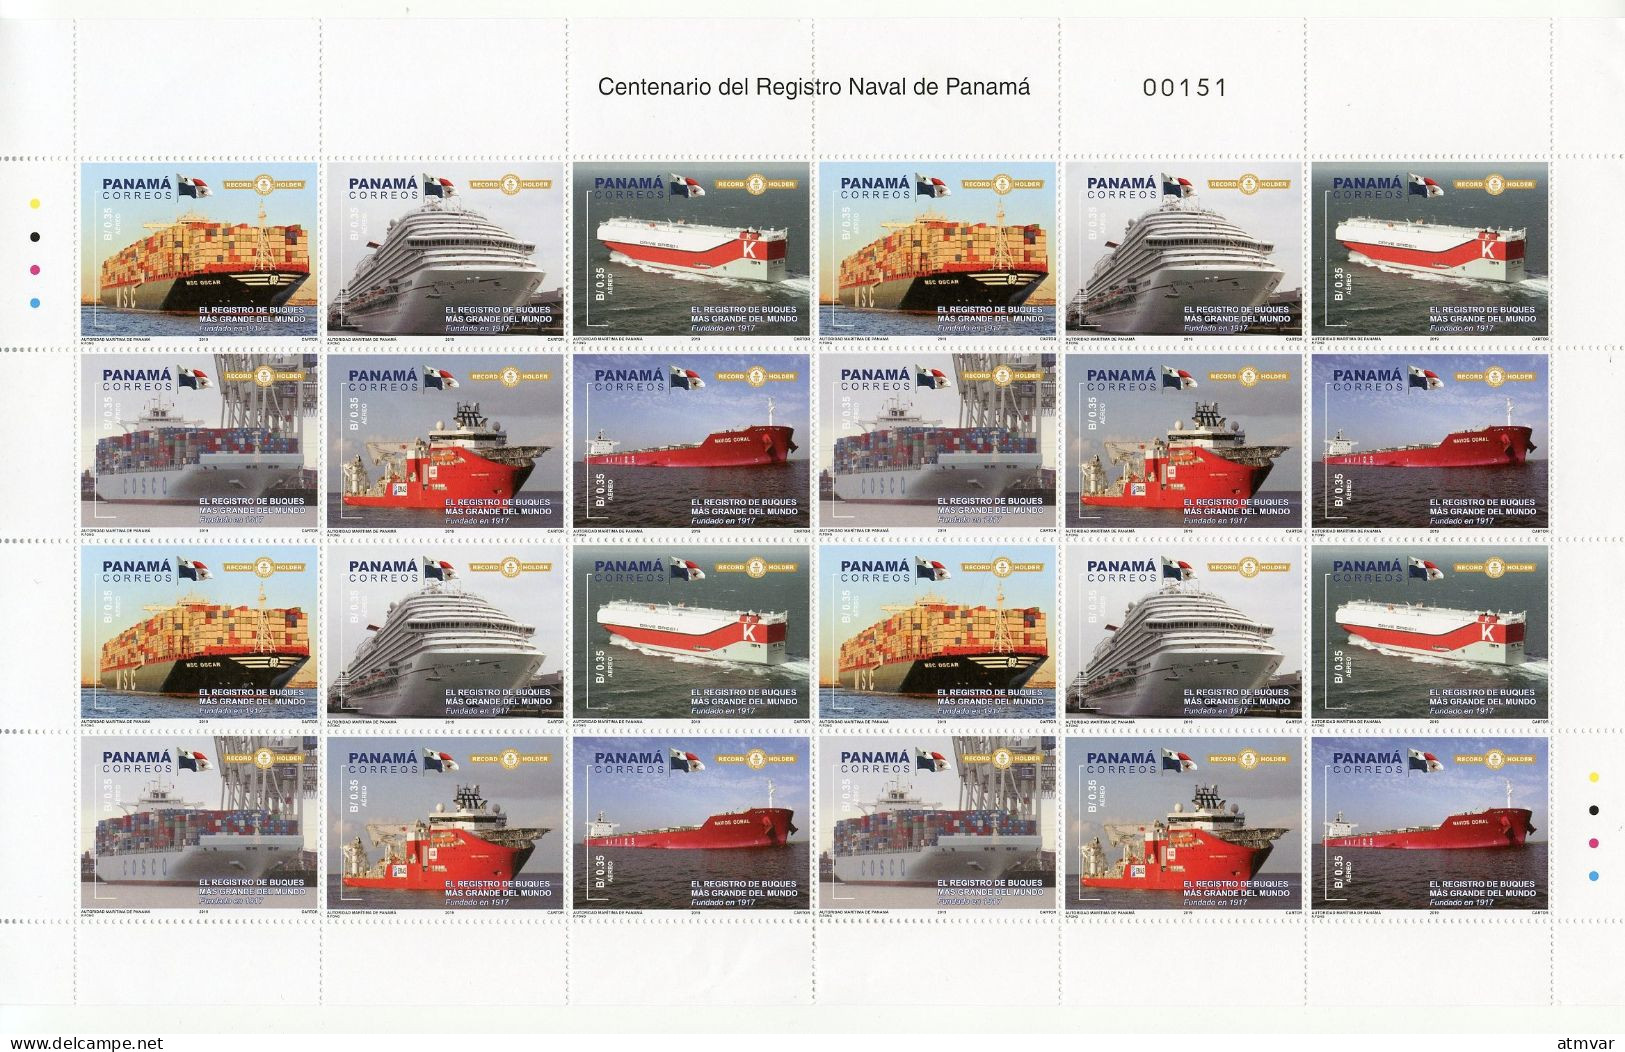 PANAMA (2019) Centenario Del Registro Naval, Canal, Vessel, Carguero, Container Ship, Bateau, Cruise - MINT - Panamá